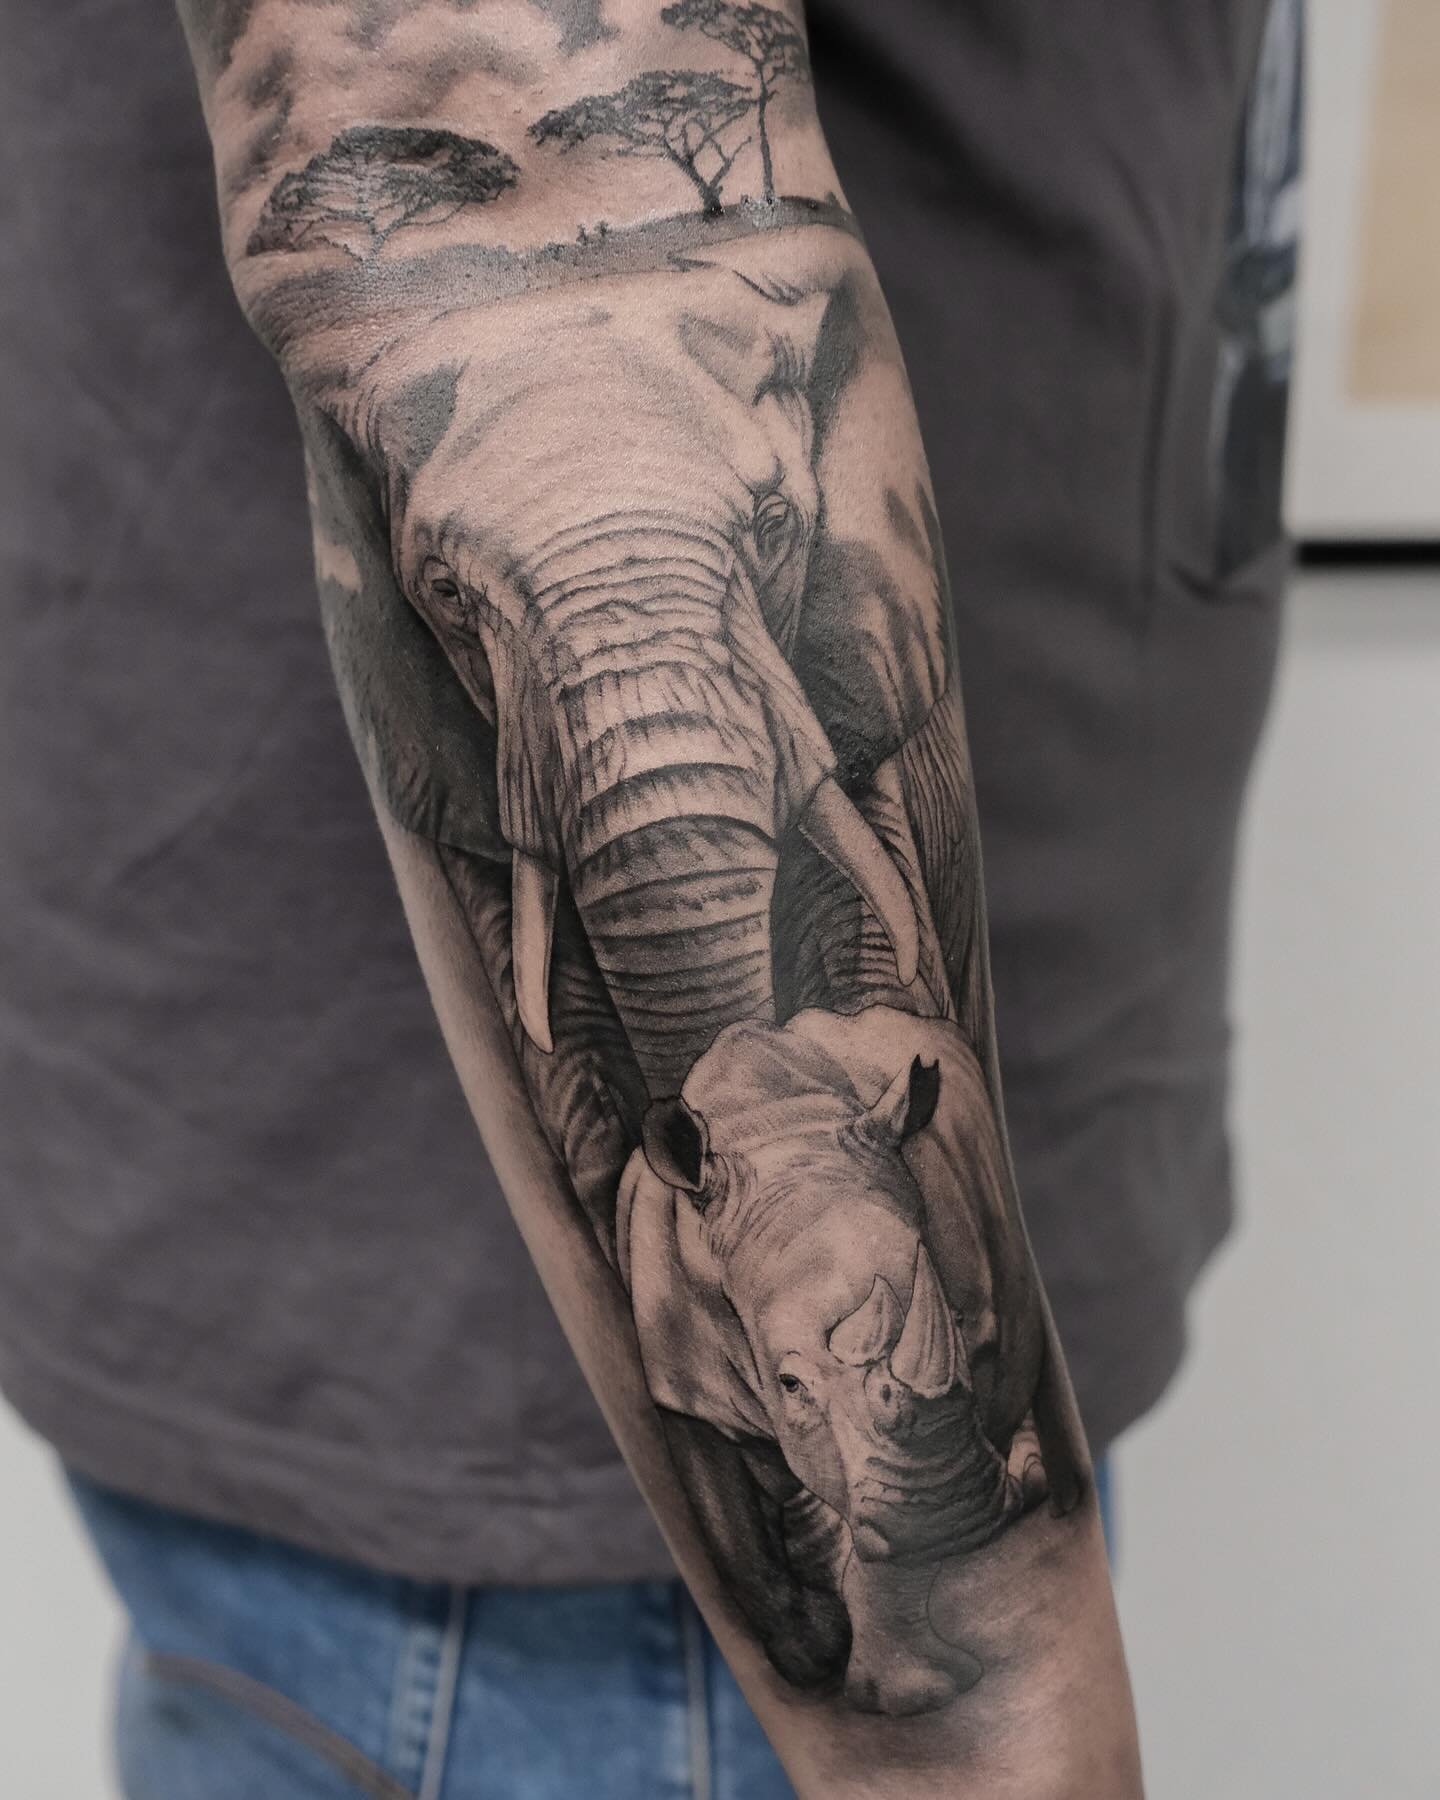 Danke f&uuml;r dein Vertrauen Pascal
.
.
.
.
#realistictattoo #waldemartattooing #waldilism #blackandgreytattoo #nobletattoo #nobletattoo #art #tattooart #artist #tattooartist #inked #fineline #delicattattoo #fyp #germantattooer #elephant #rhino